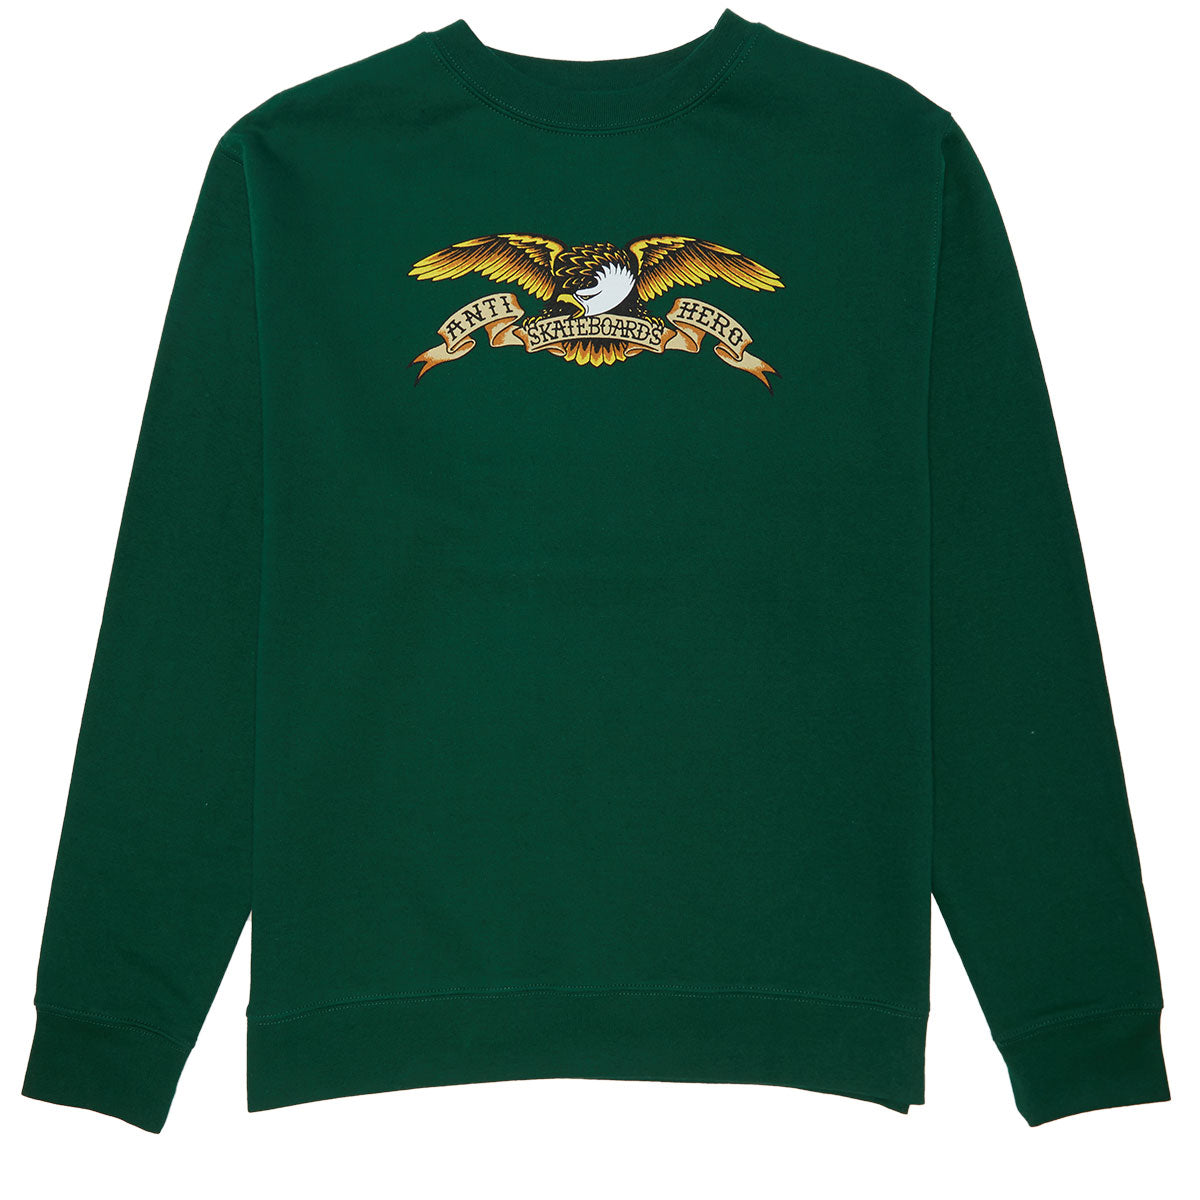 Anti-Hero Eagle Sweatshirt - Dark Green/Black Multi Color image 1